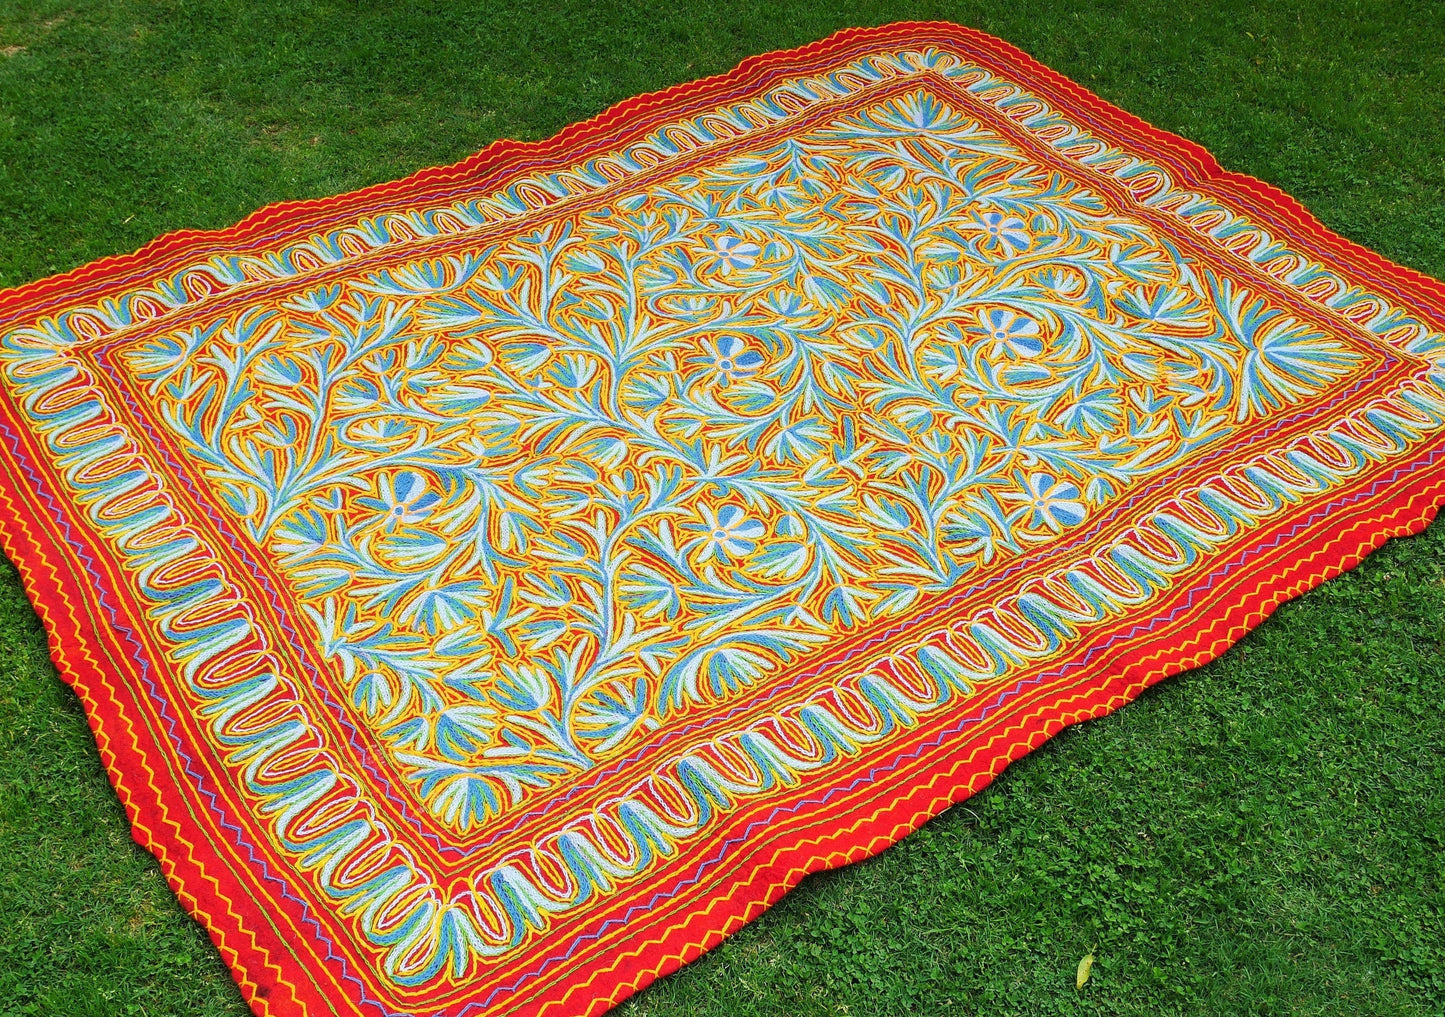 Kashmiri wool rug boho area rug | colorful Indian floor rug | traditional hand felted wool rug 7x5 ft Persian embroidery bohemian bedroom